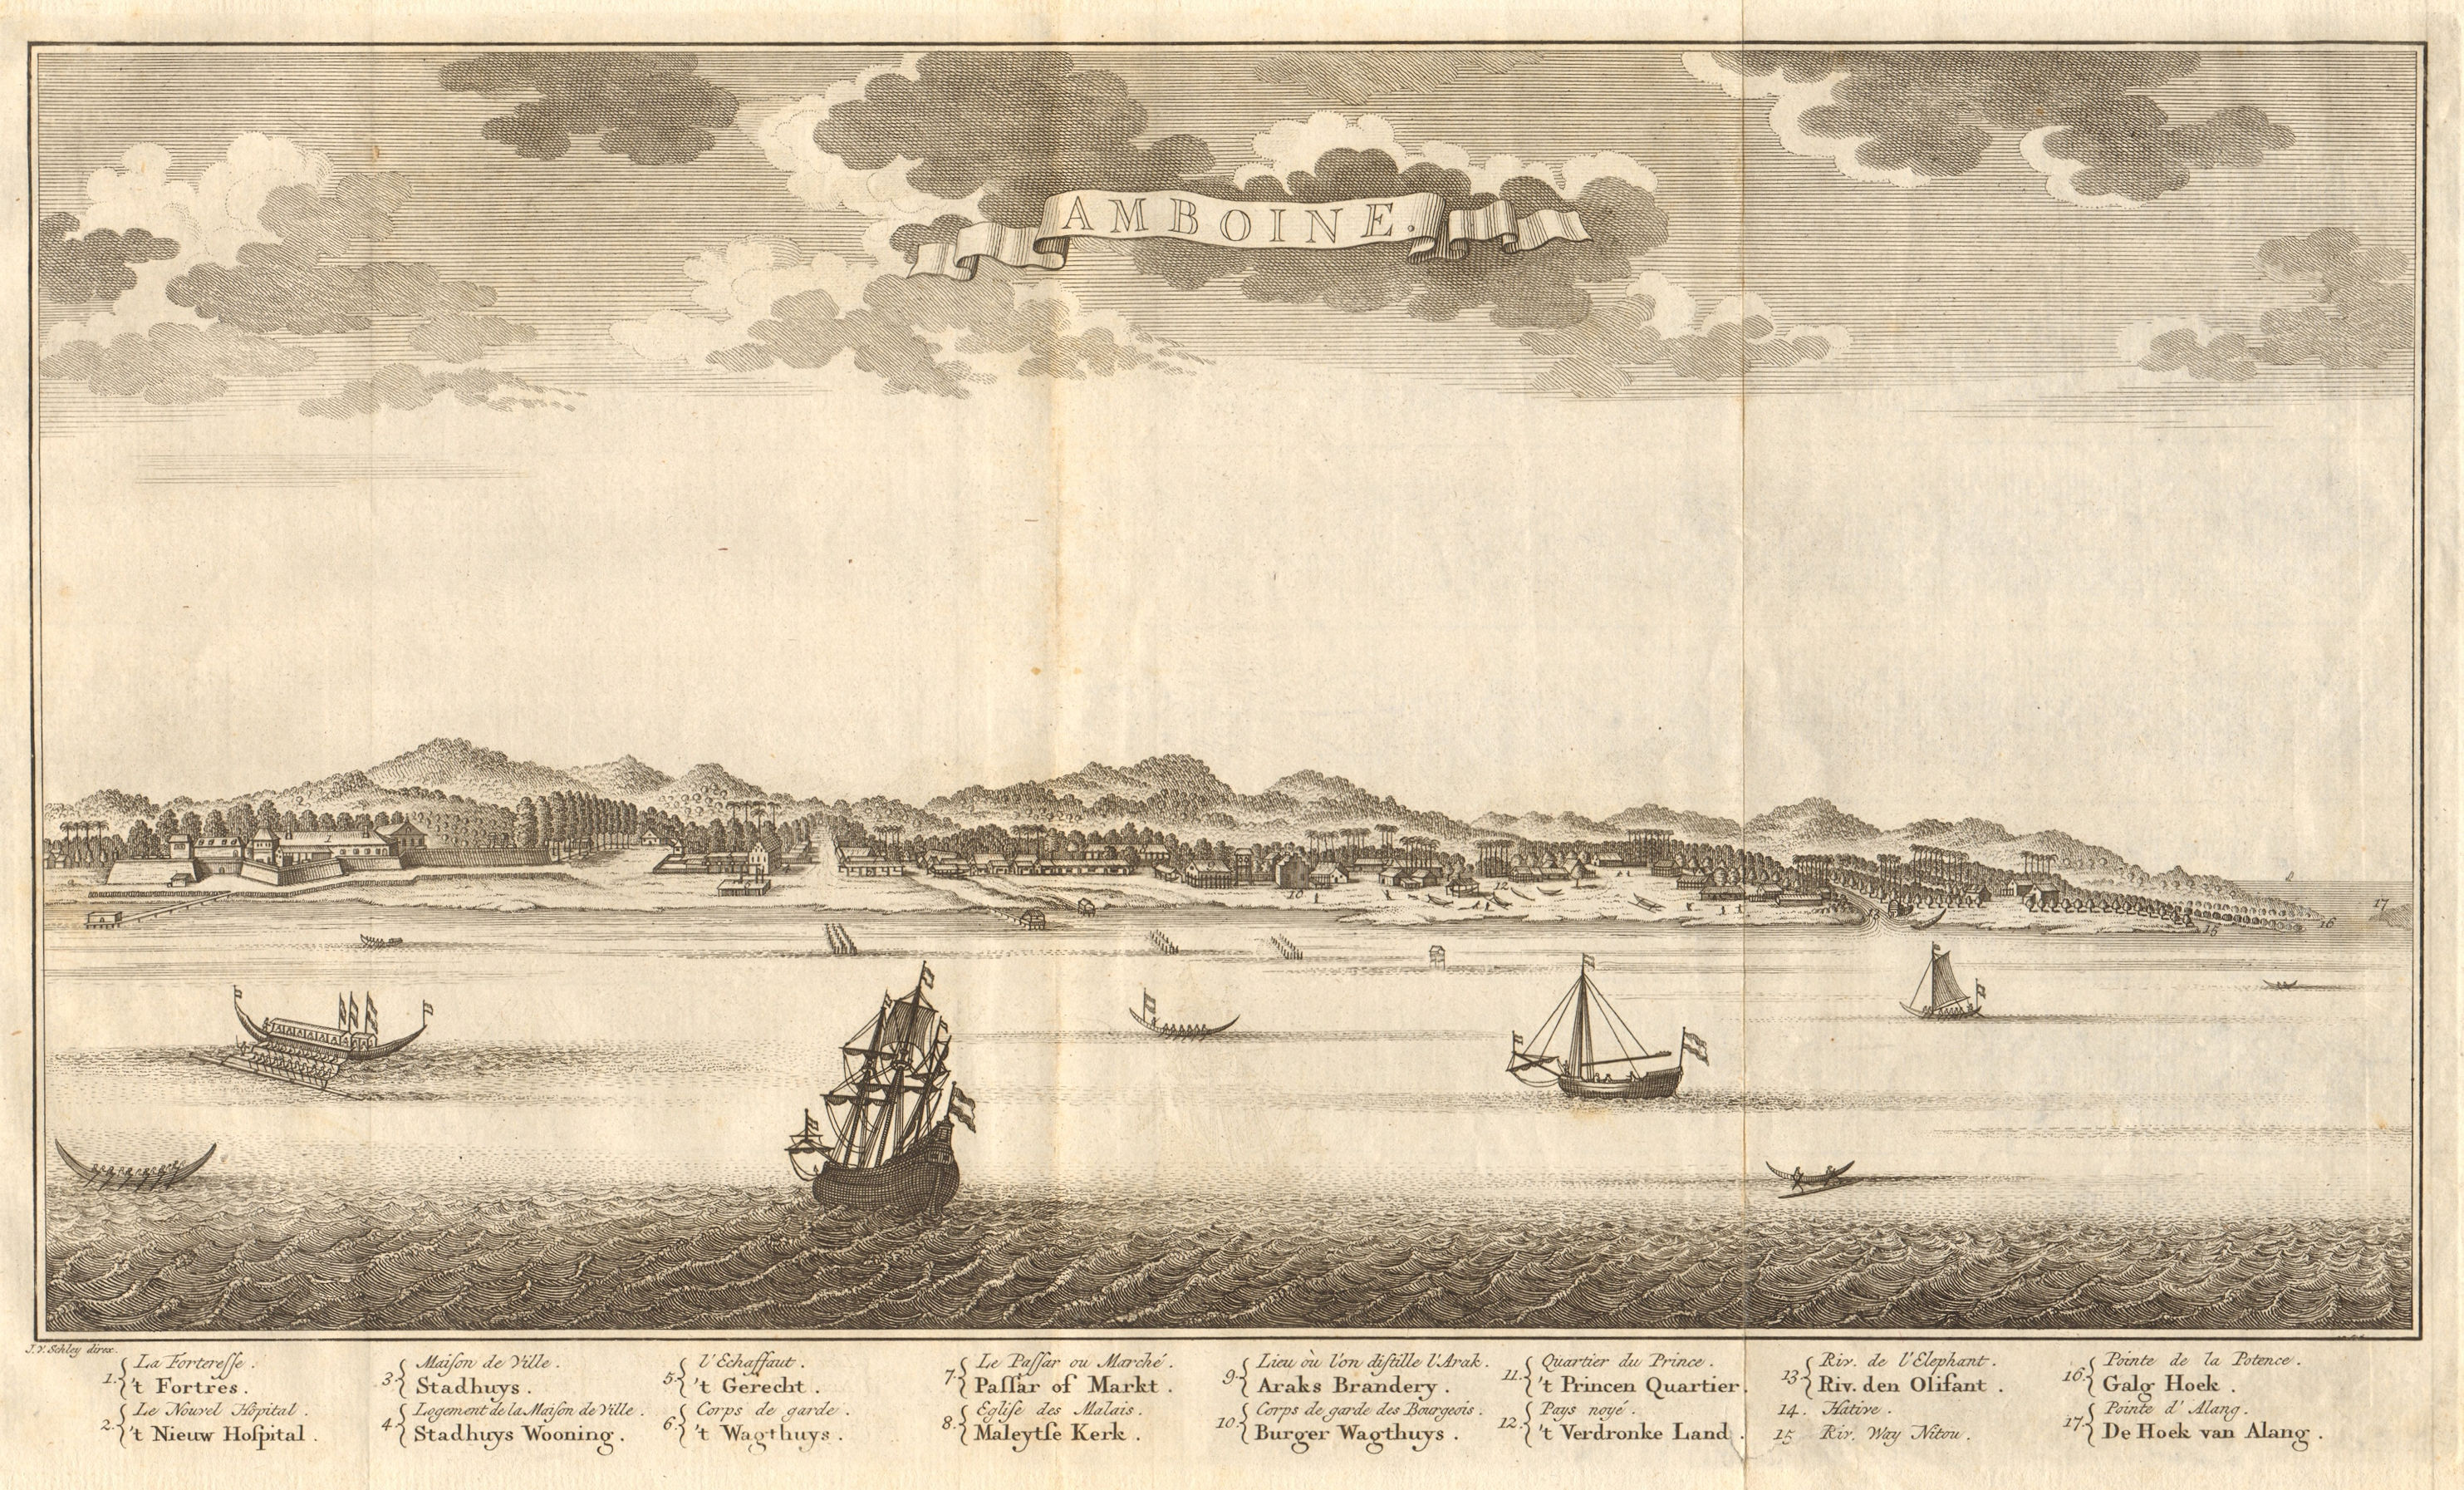 'Amboine'. Ambon city & island, Molucca / Maluku islands. Indonesia. SCHLEY 1755